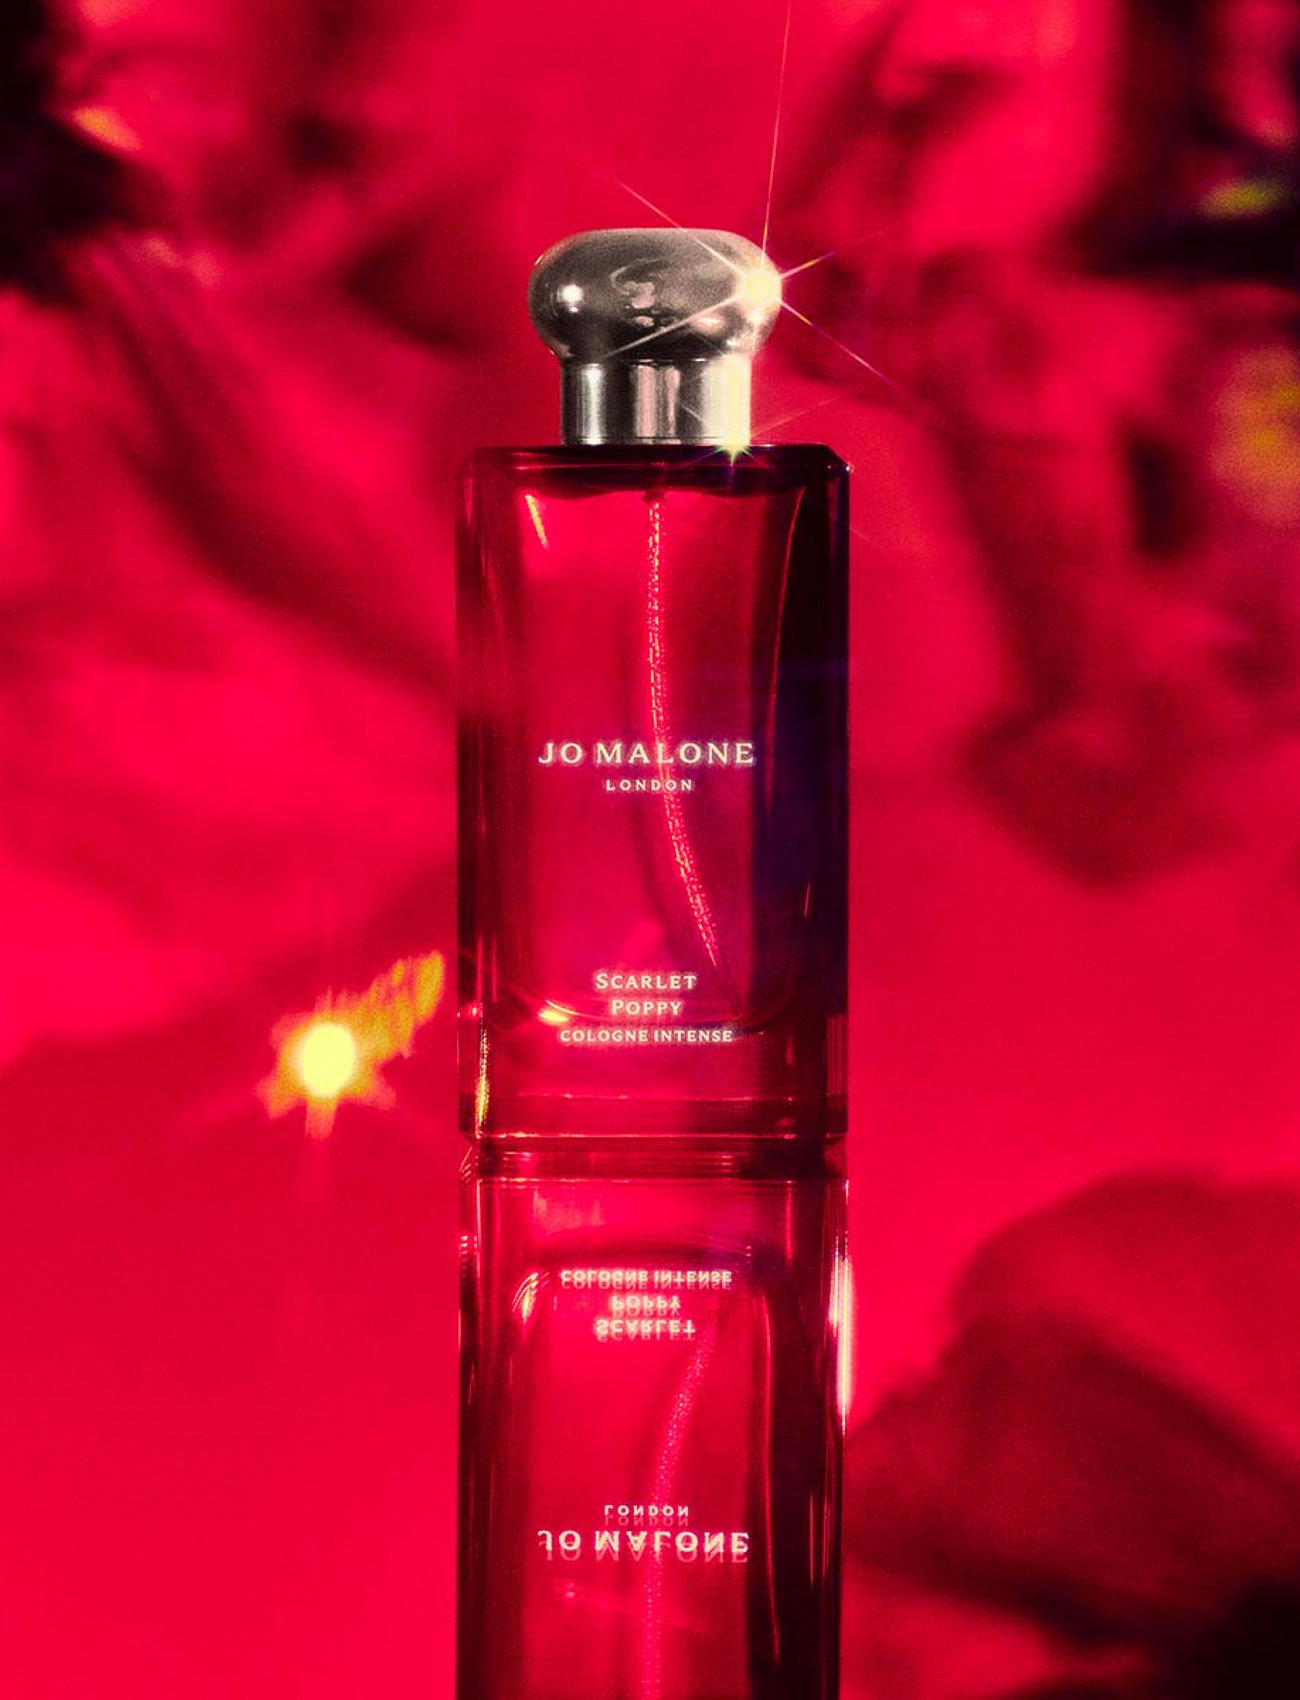 Udvidelse hage Natur Jo Malone London Scarlet Poppy Cologne Intense - Parfume | Boozt.com